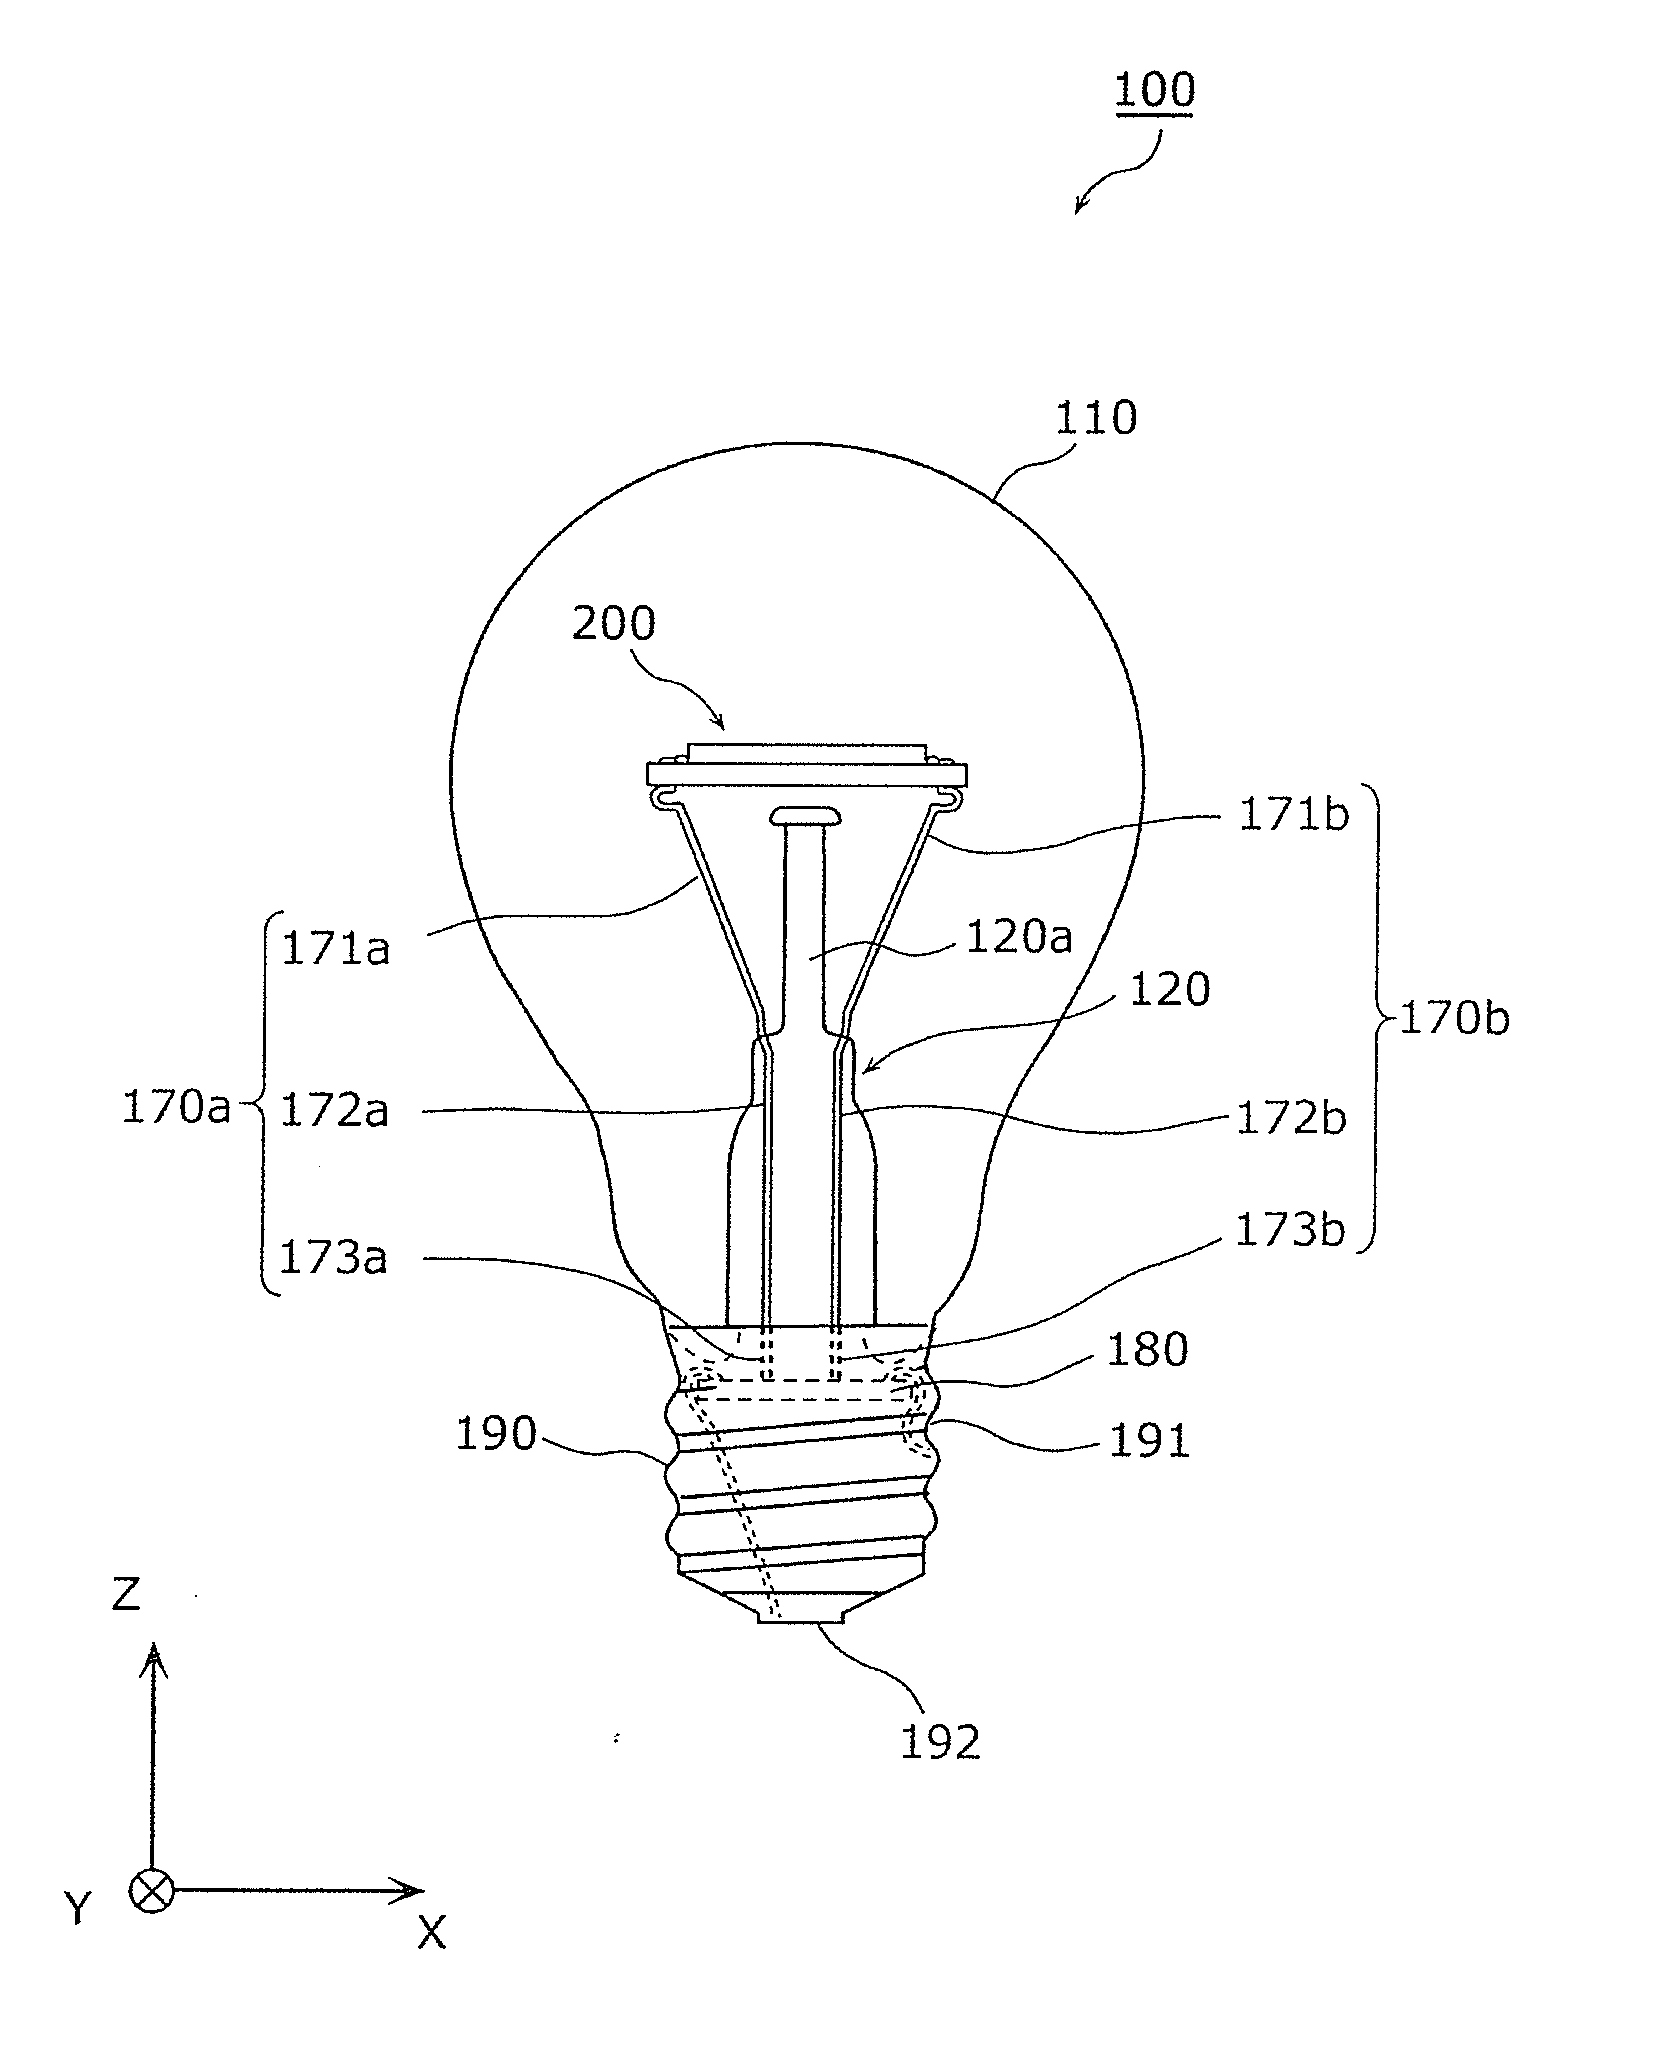 Light bulb shaped lamp and lighting apparatus